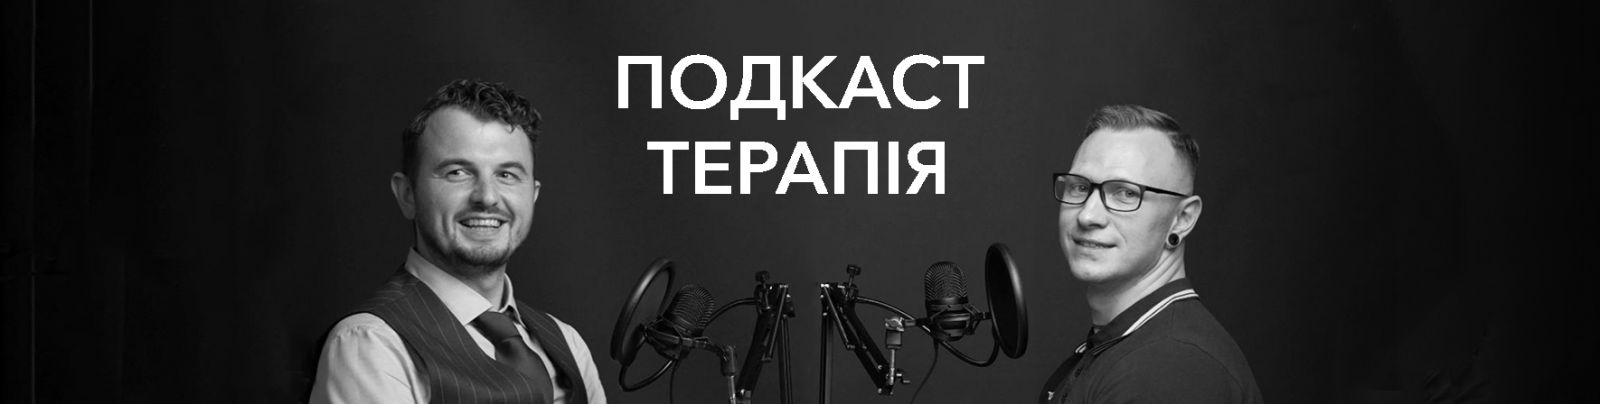 Podcast Terapia u Zhytomyri